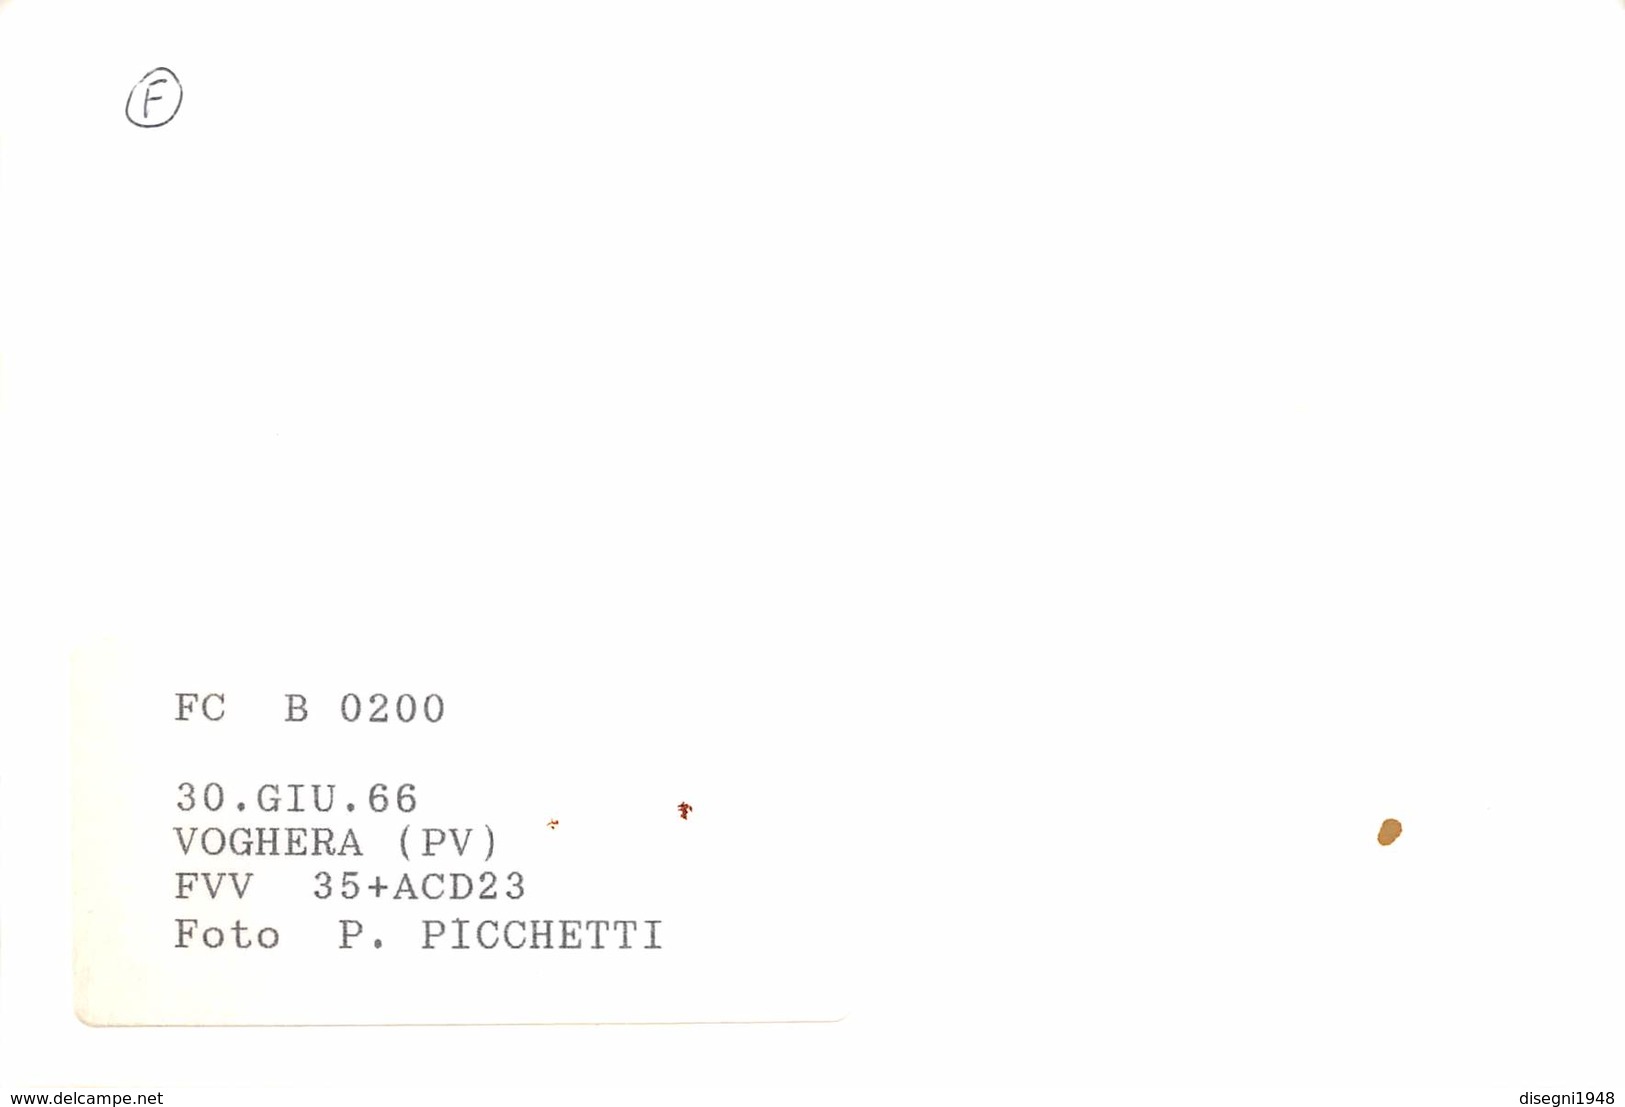 08526 "FVV 35 + ACD23 - VOGHERA (PV) - FOTO P. PICCHETTI - 30 GIUGNO 1966" ANIMATA. TRENO. FOTO. ORIG. - Treni